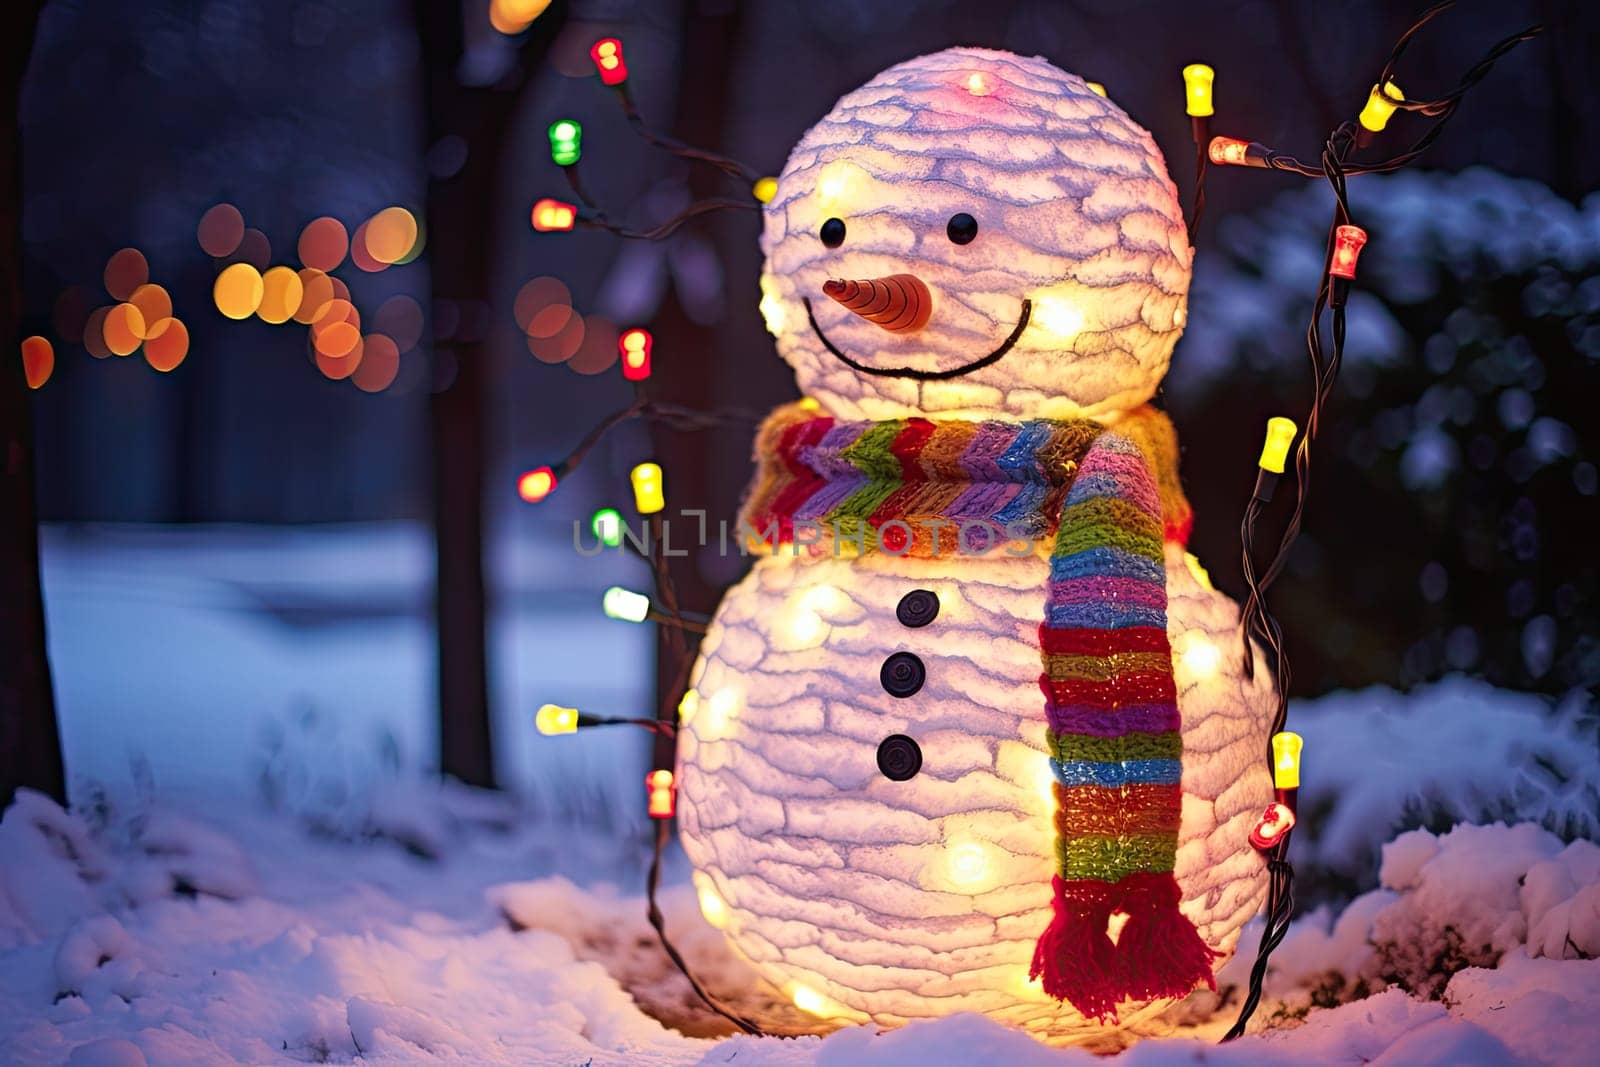 A Frosty Friend Illuminated in the Winter Wonderland